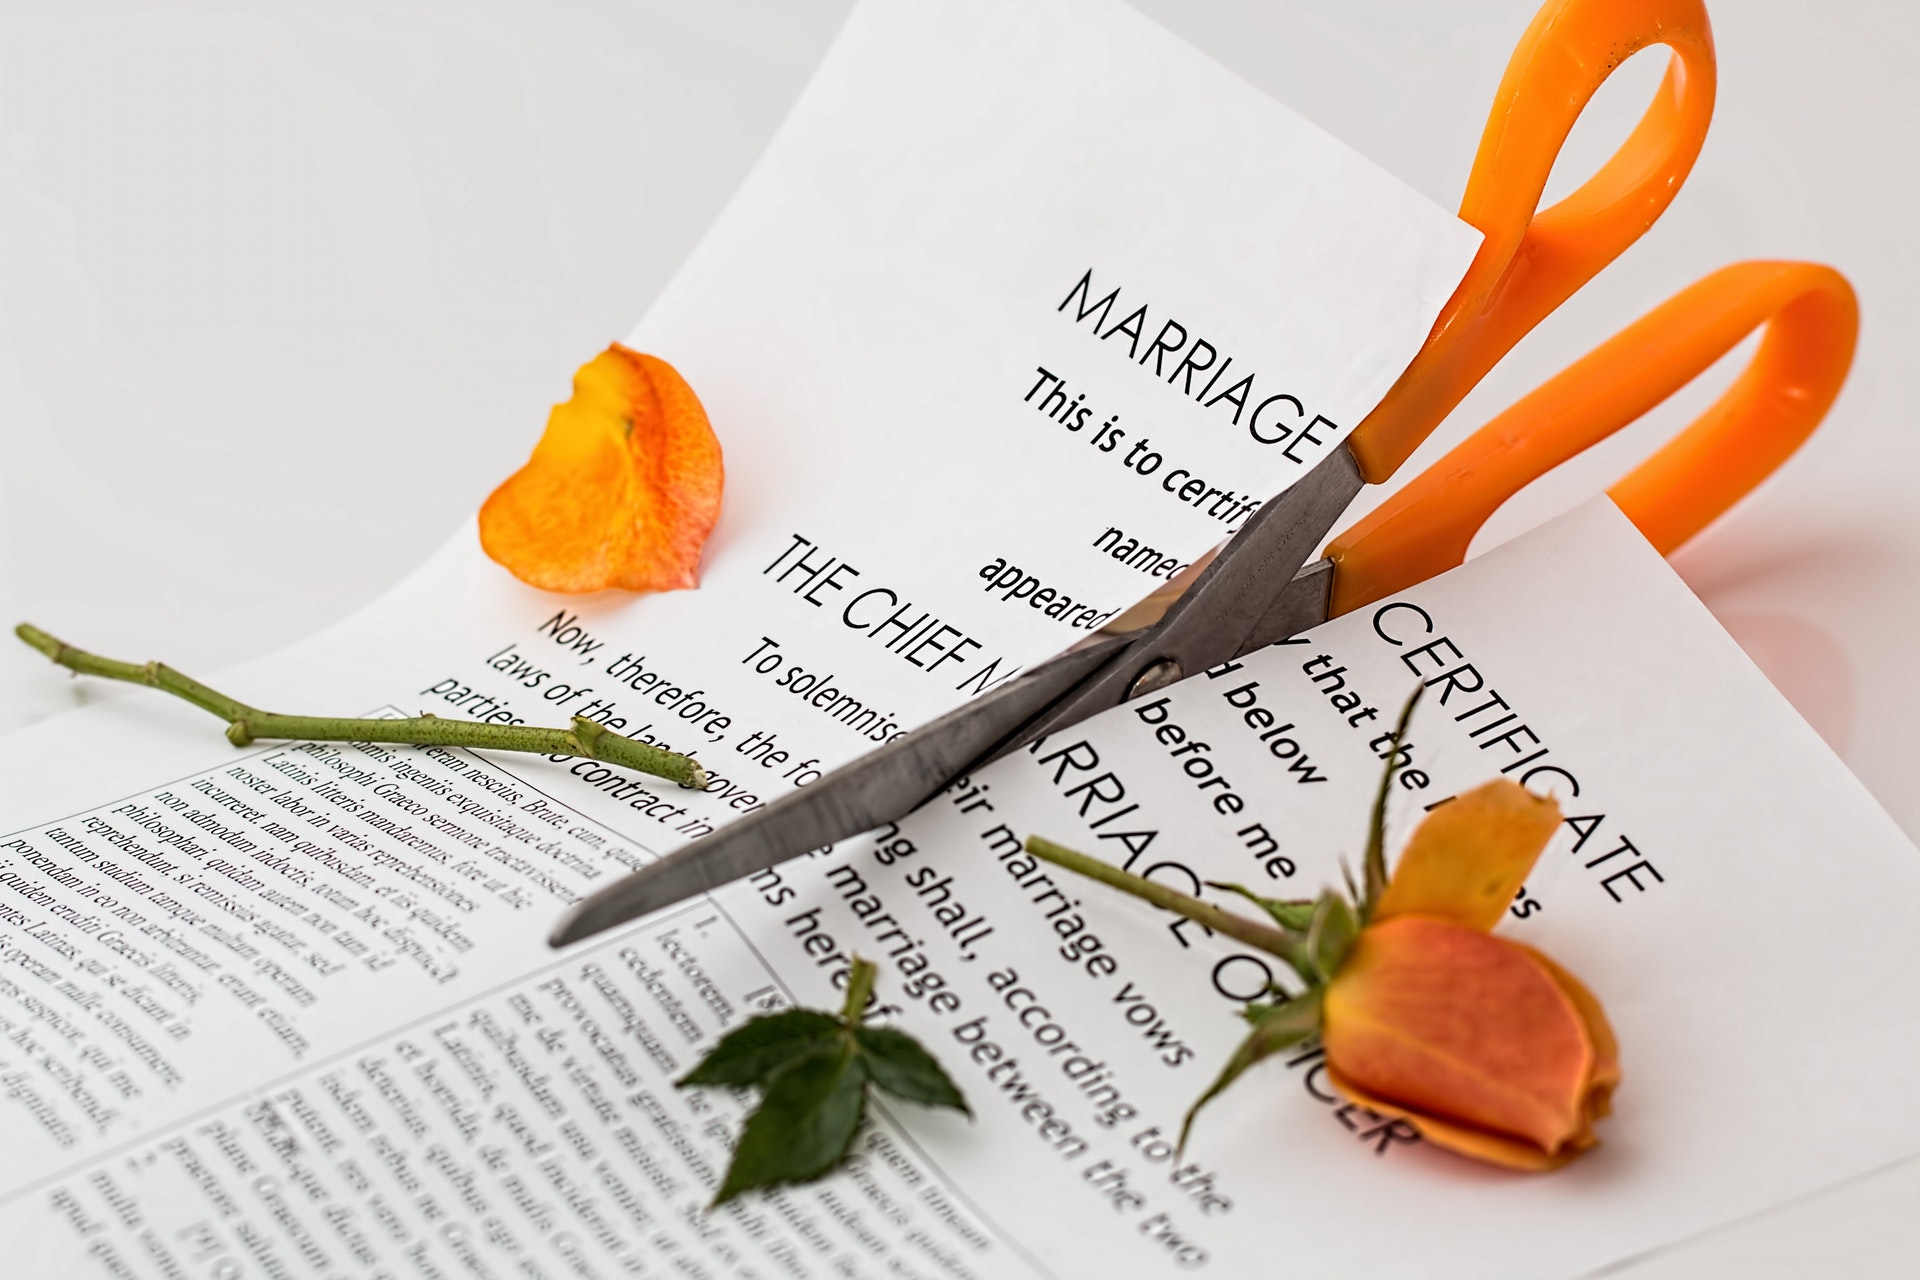 Marriage certificate being cut in half after divorce